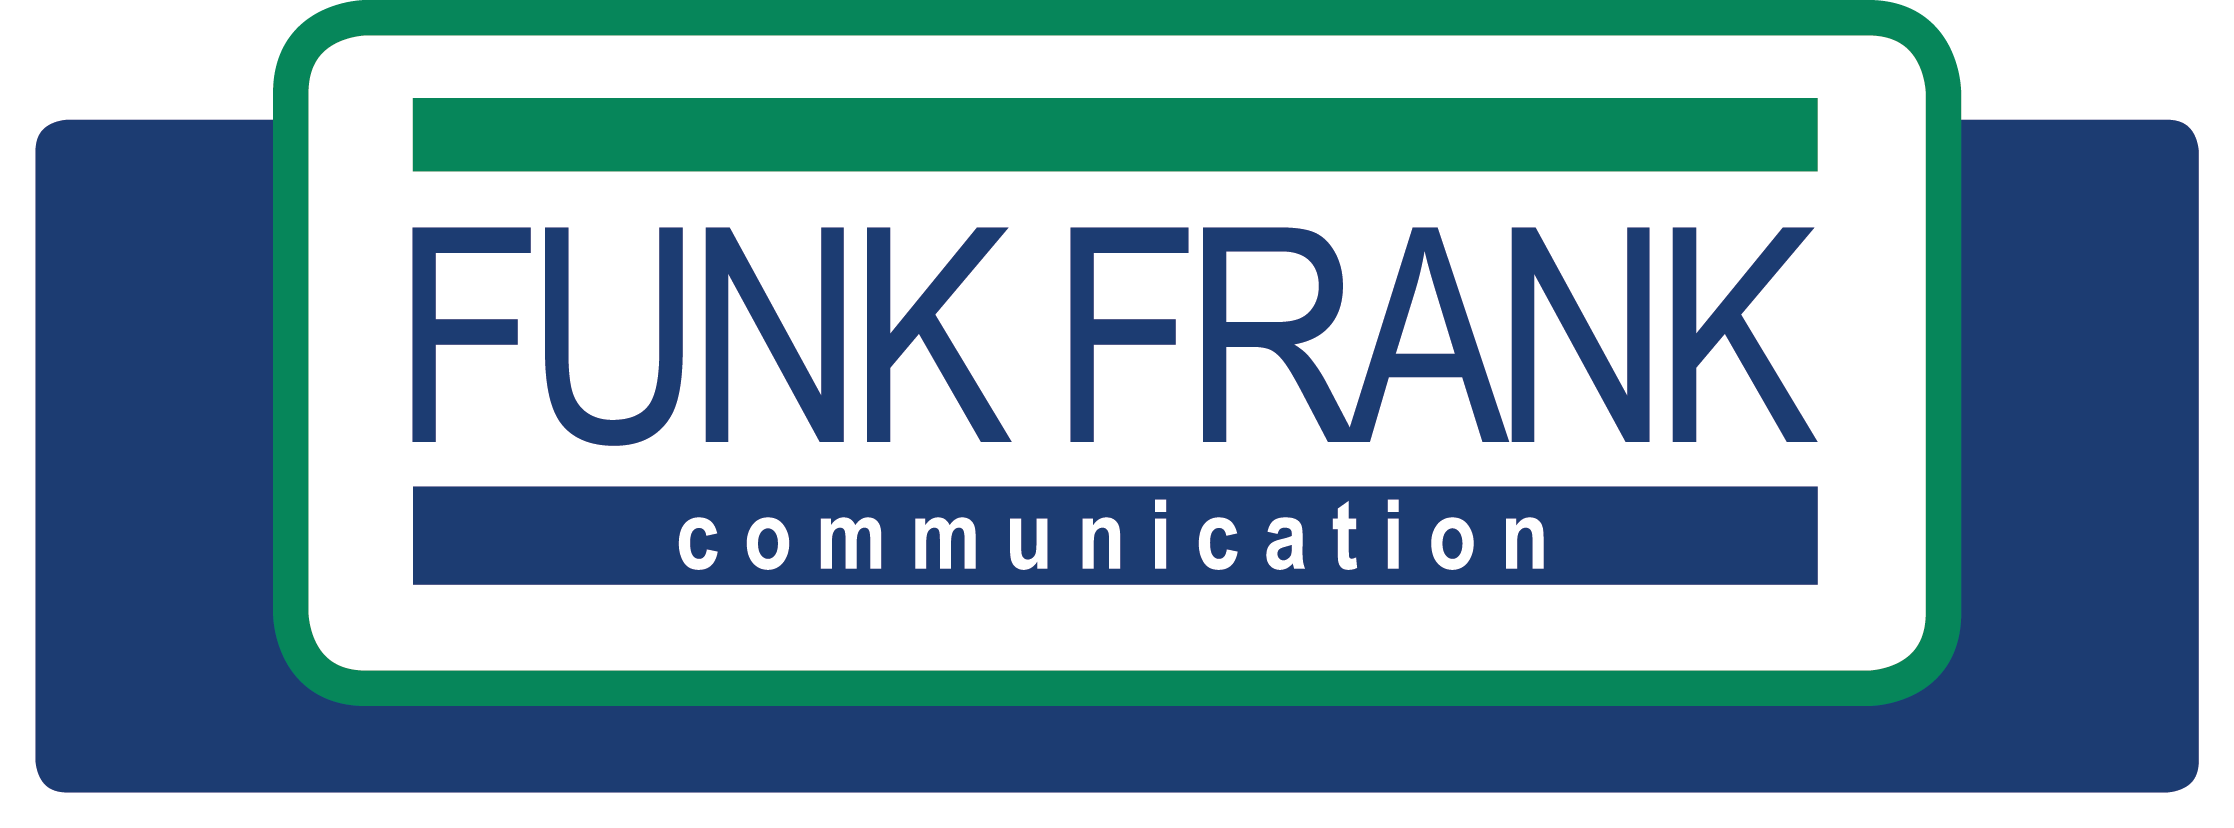 FunkFrank GmbH &
Co. KG